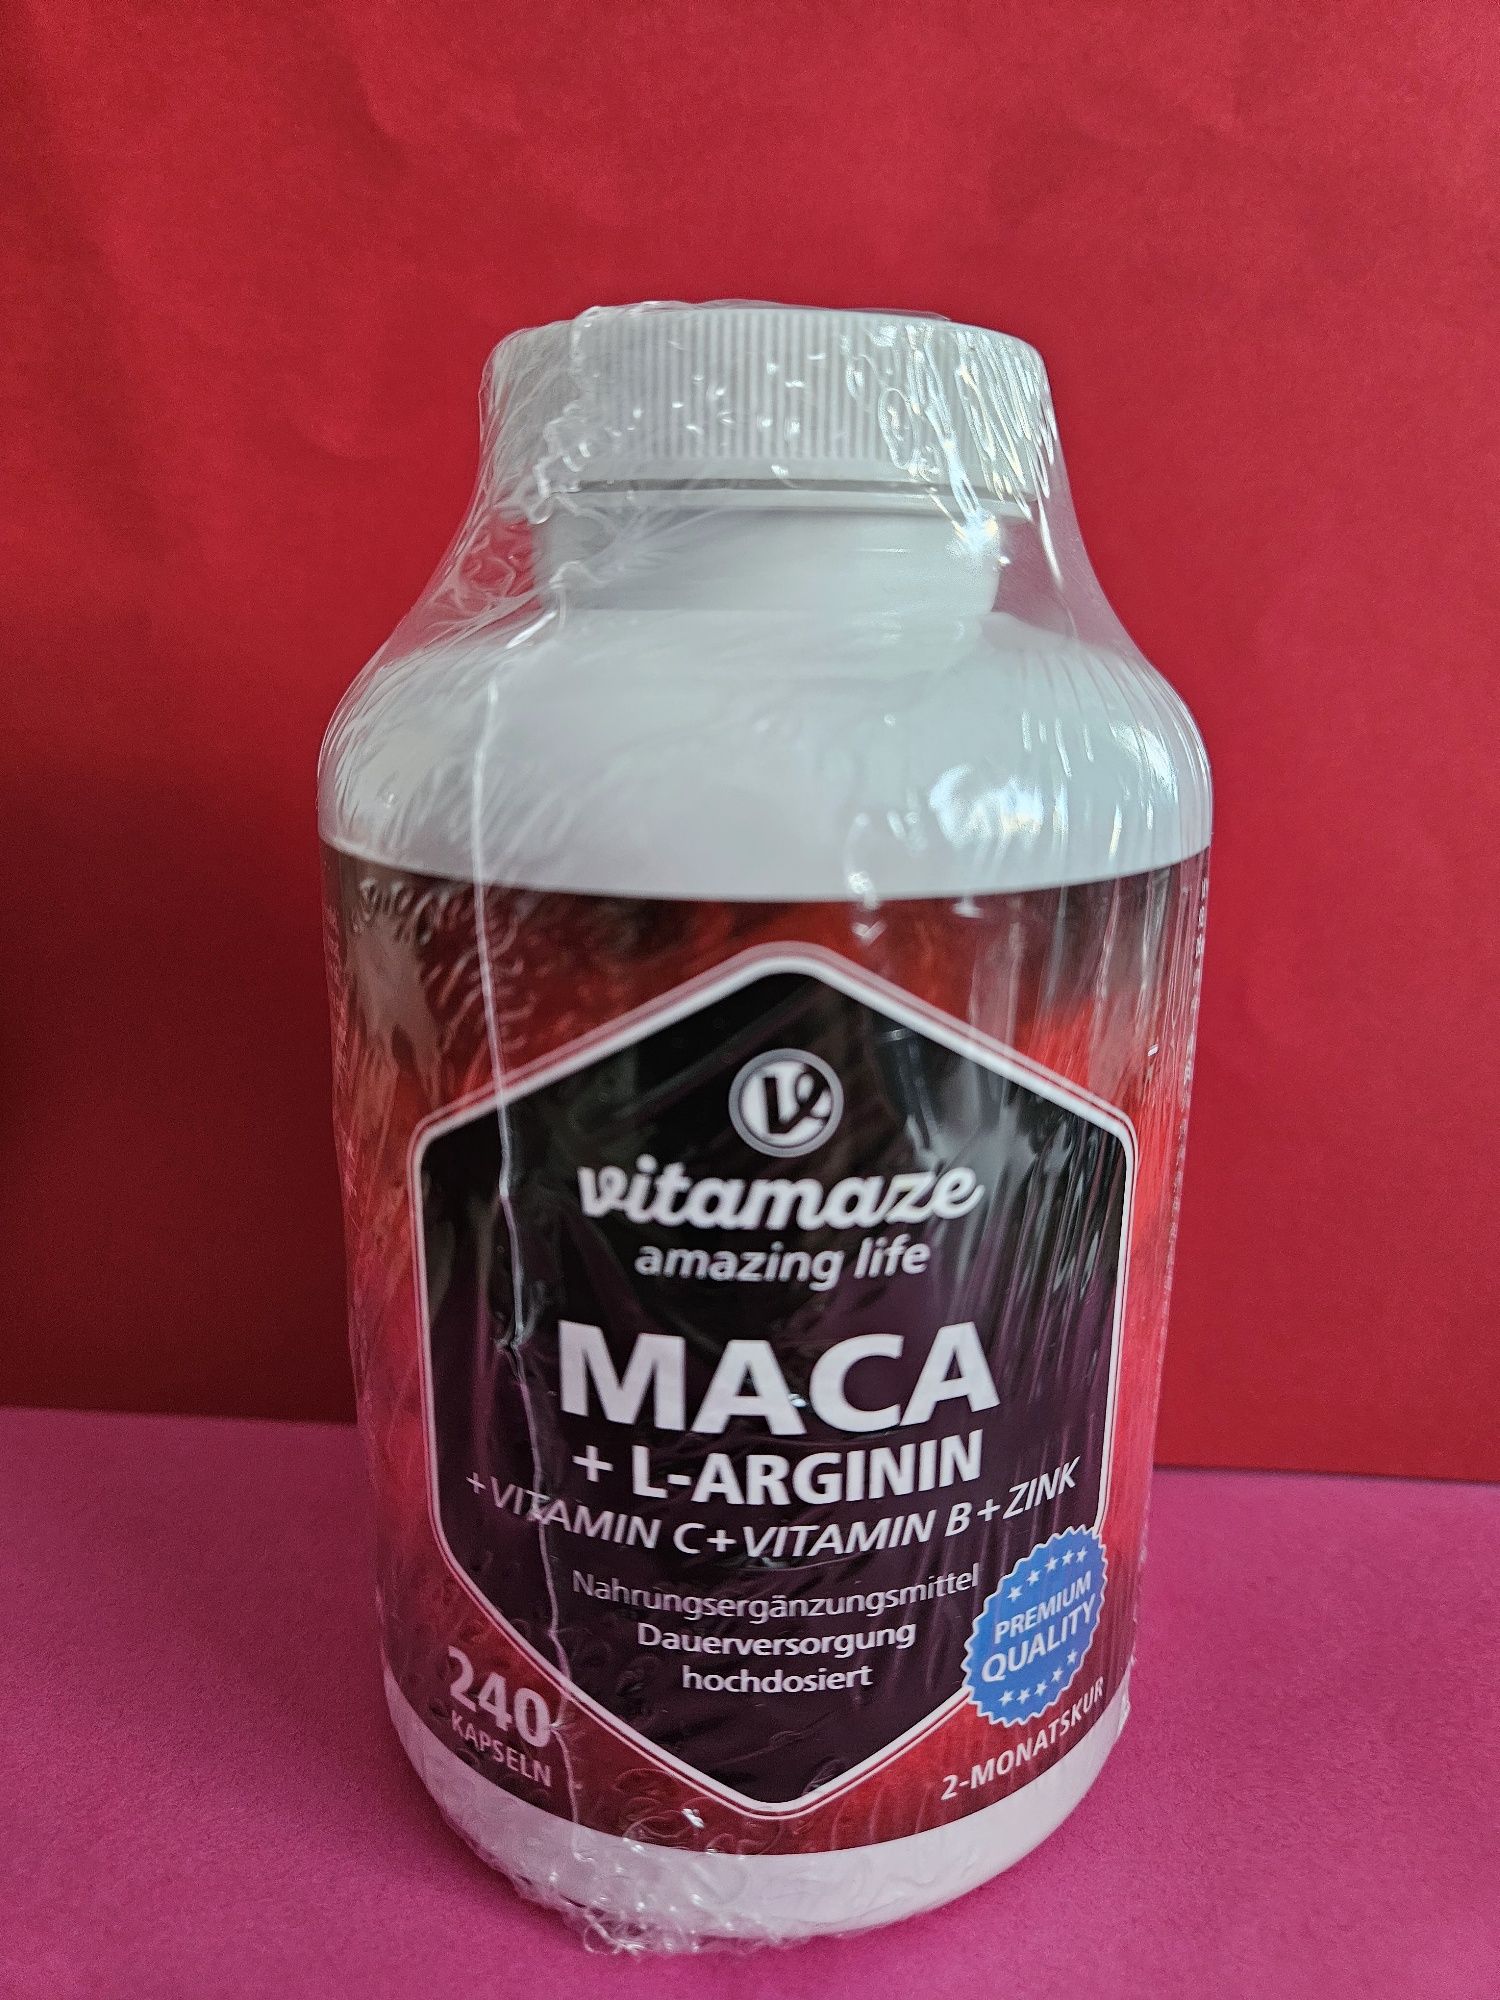 Maca+L-arginina+Vit C+Vit B+zinc 240capsule -Supliment alimentar